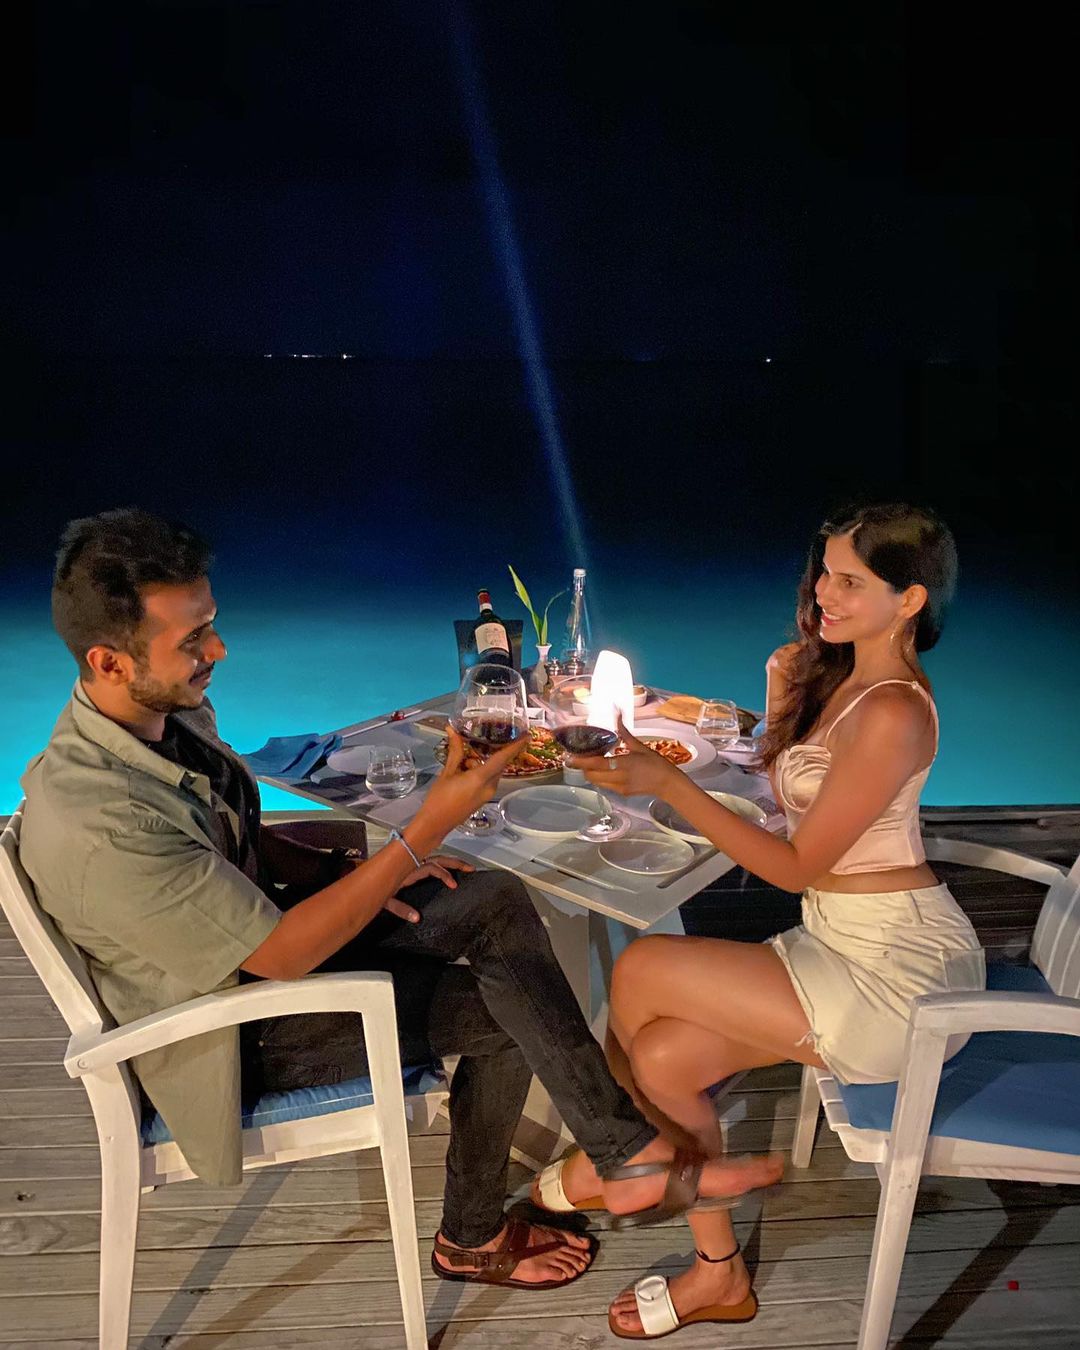  Sakshi had visited Maldives with her boyfriend Santul Katahra. (Image: Instagram)